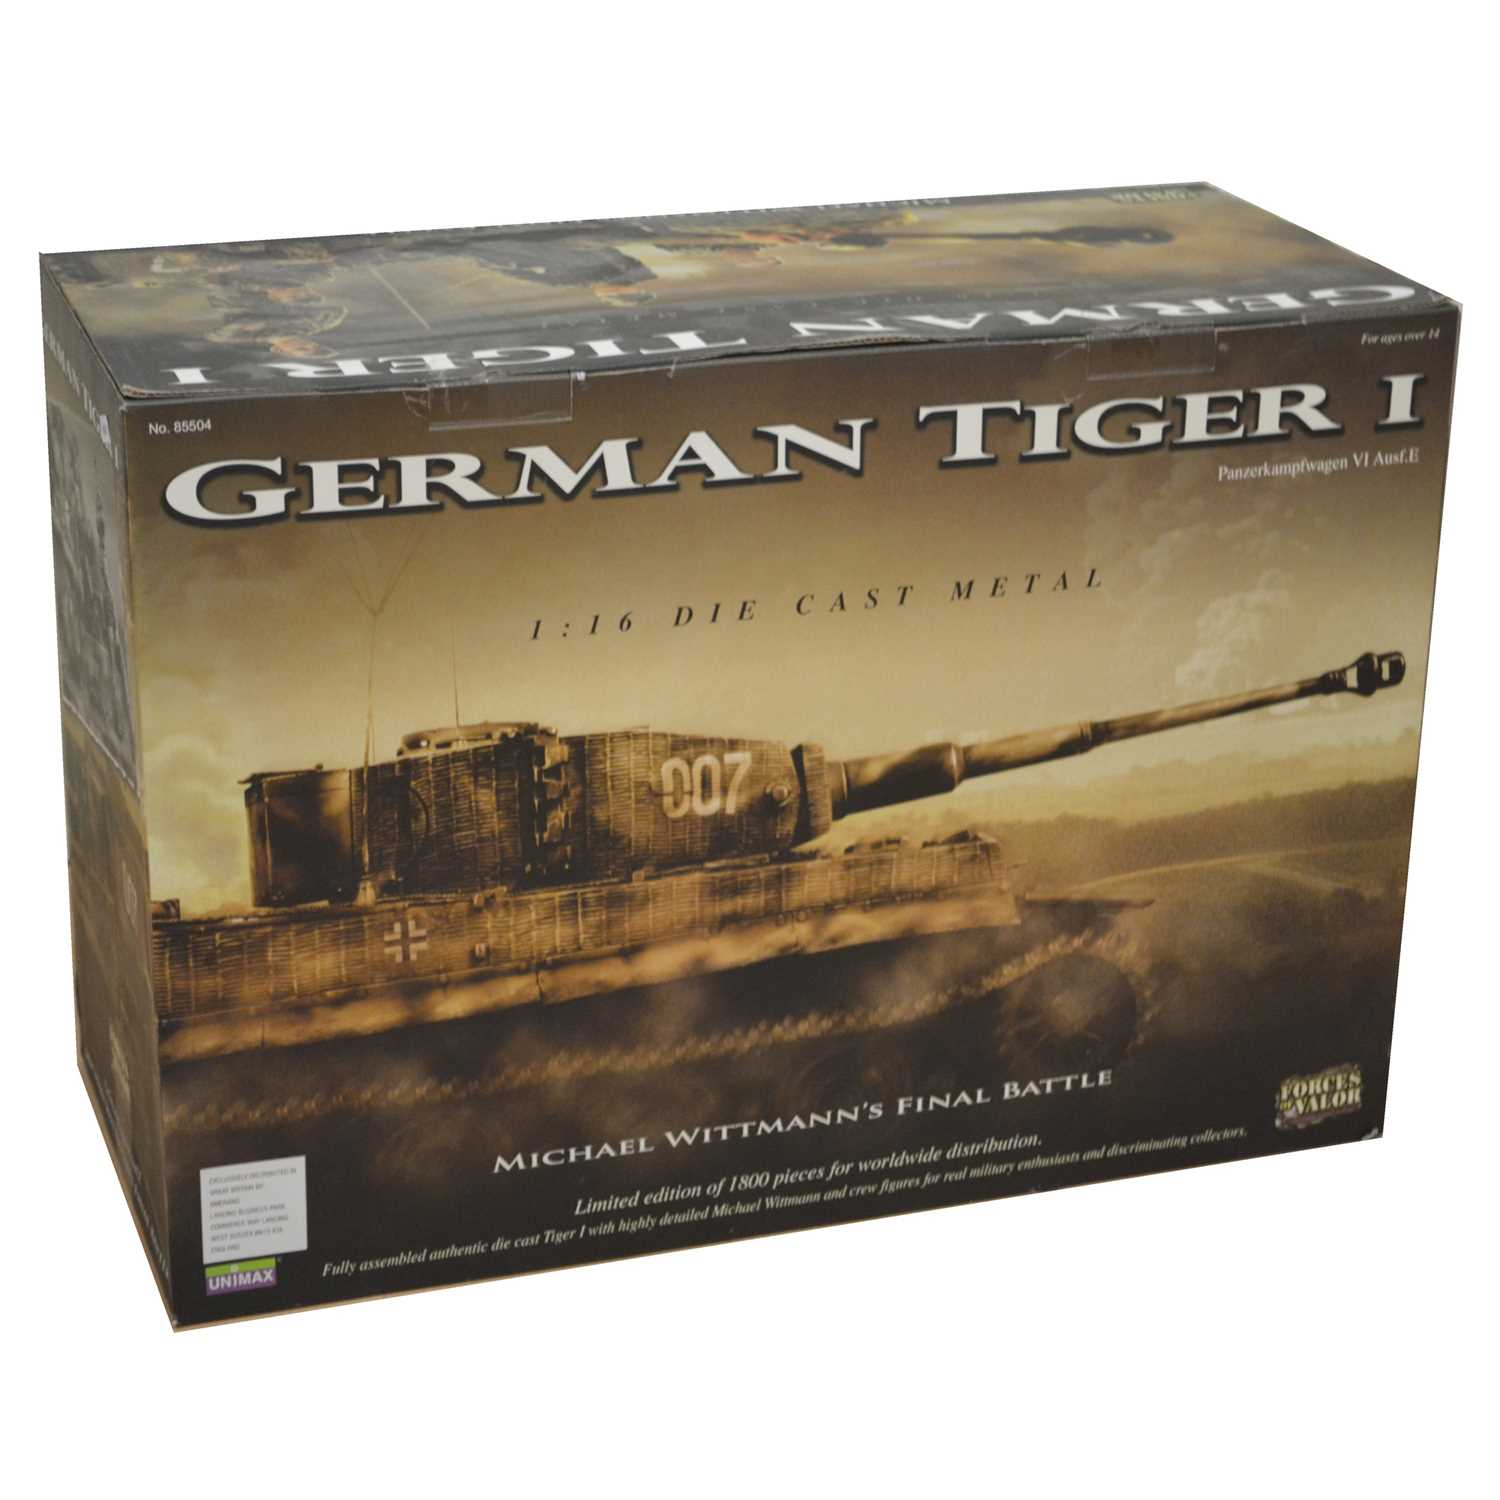 Lot 19 - Forces of Valor 1:16 die-cast model; German Tiger I tank (Michael Wittmann's Final Battle)